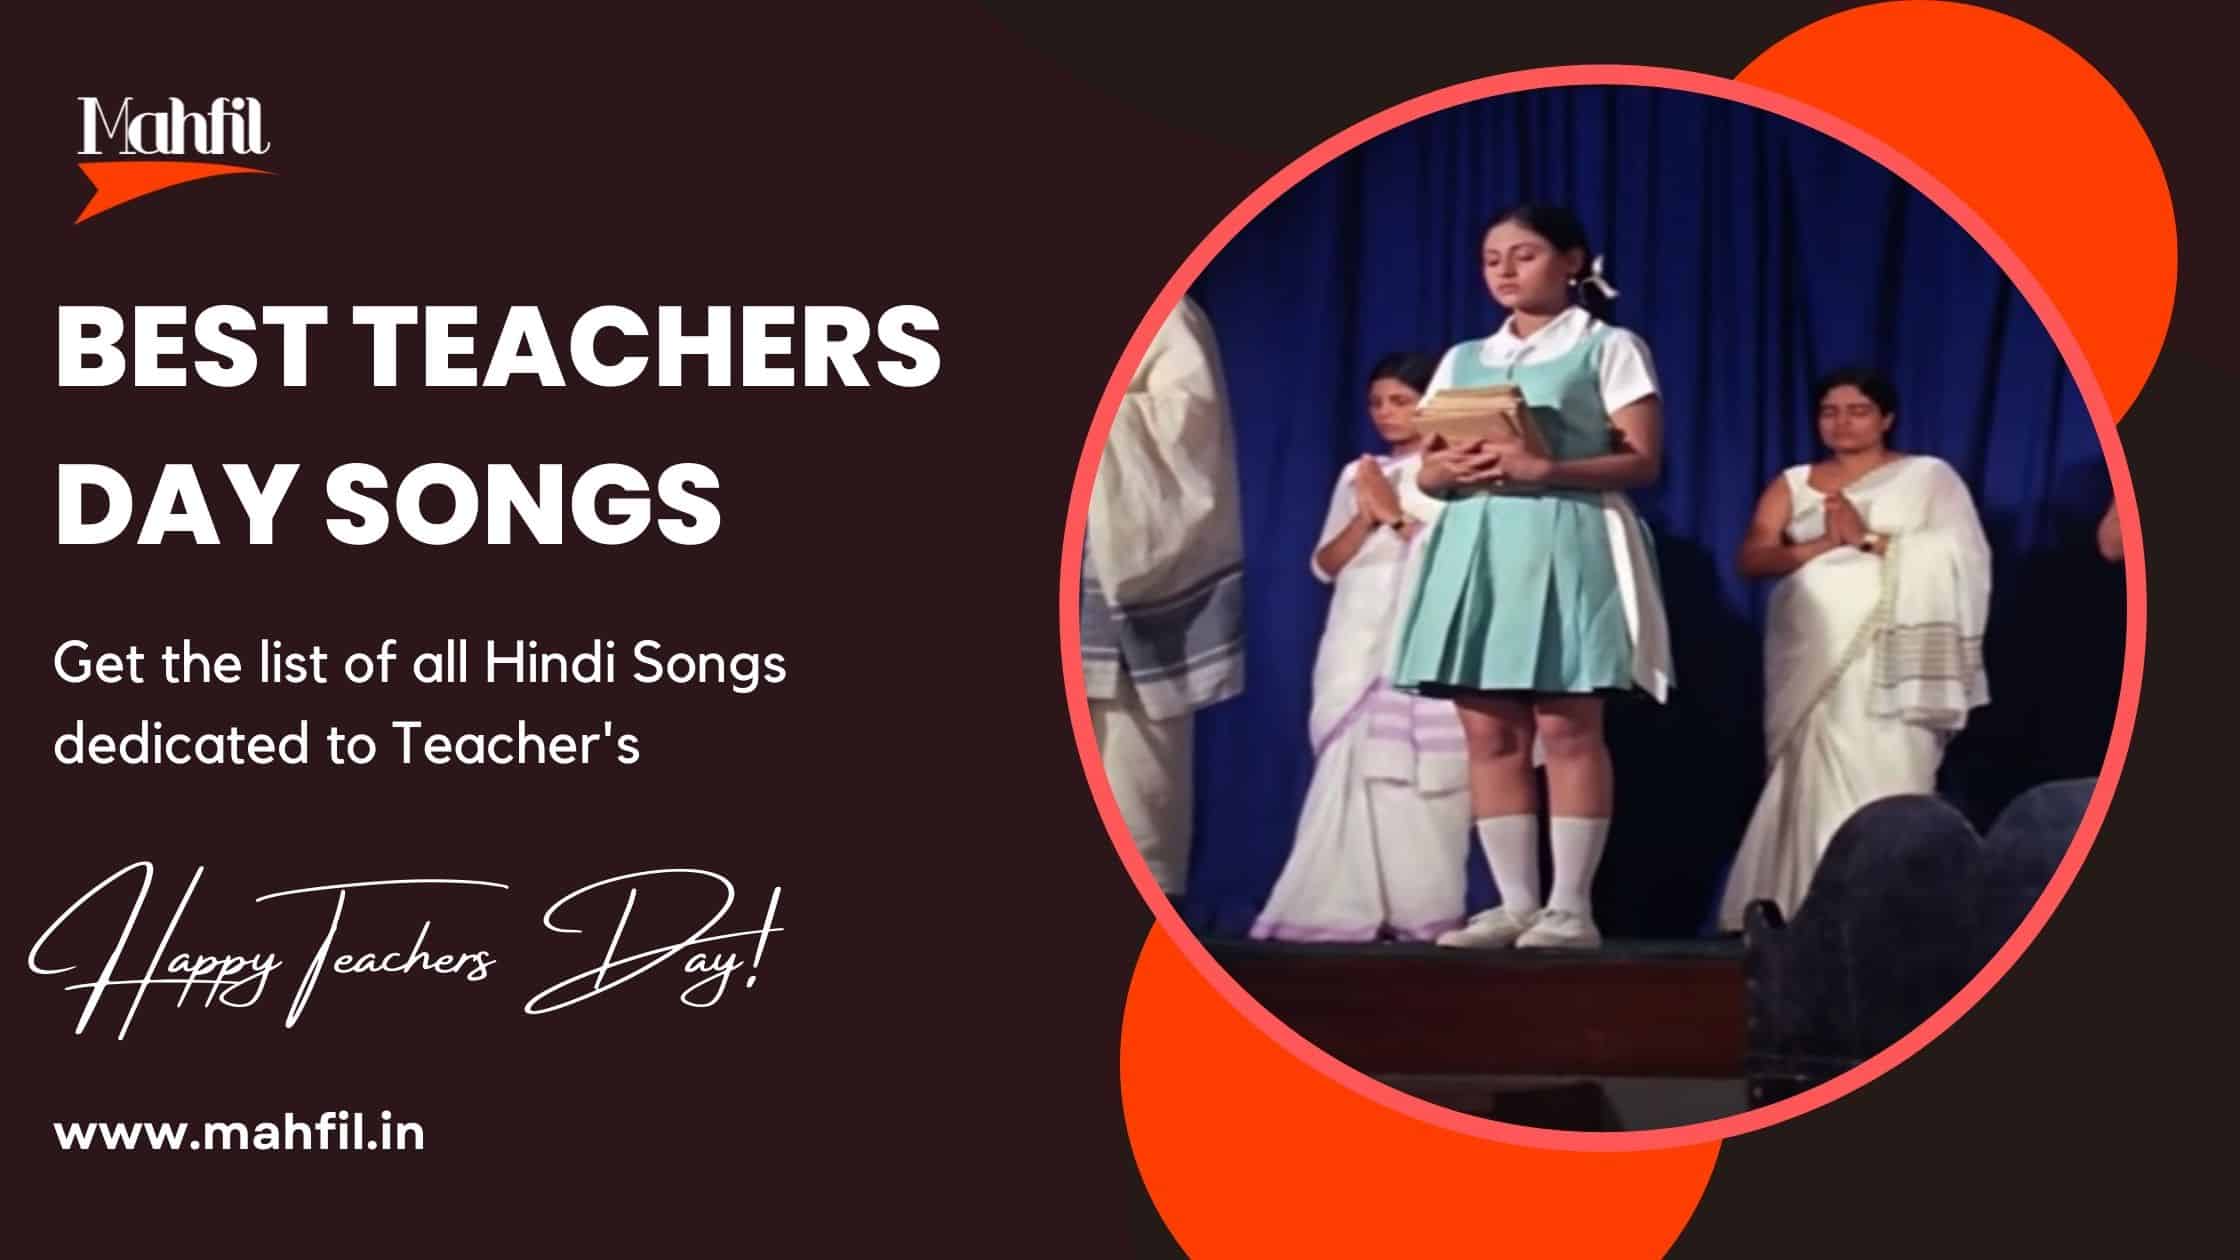 11 Best Teachers Day Songs in Hindi [Lyrics] - Greatest Hits